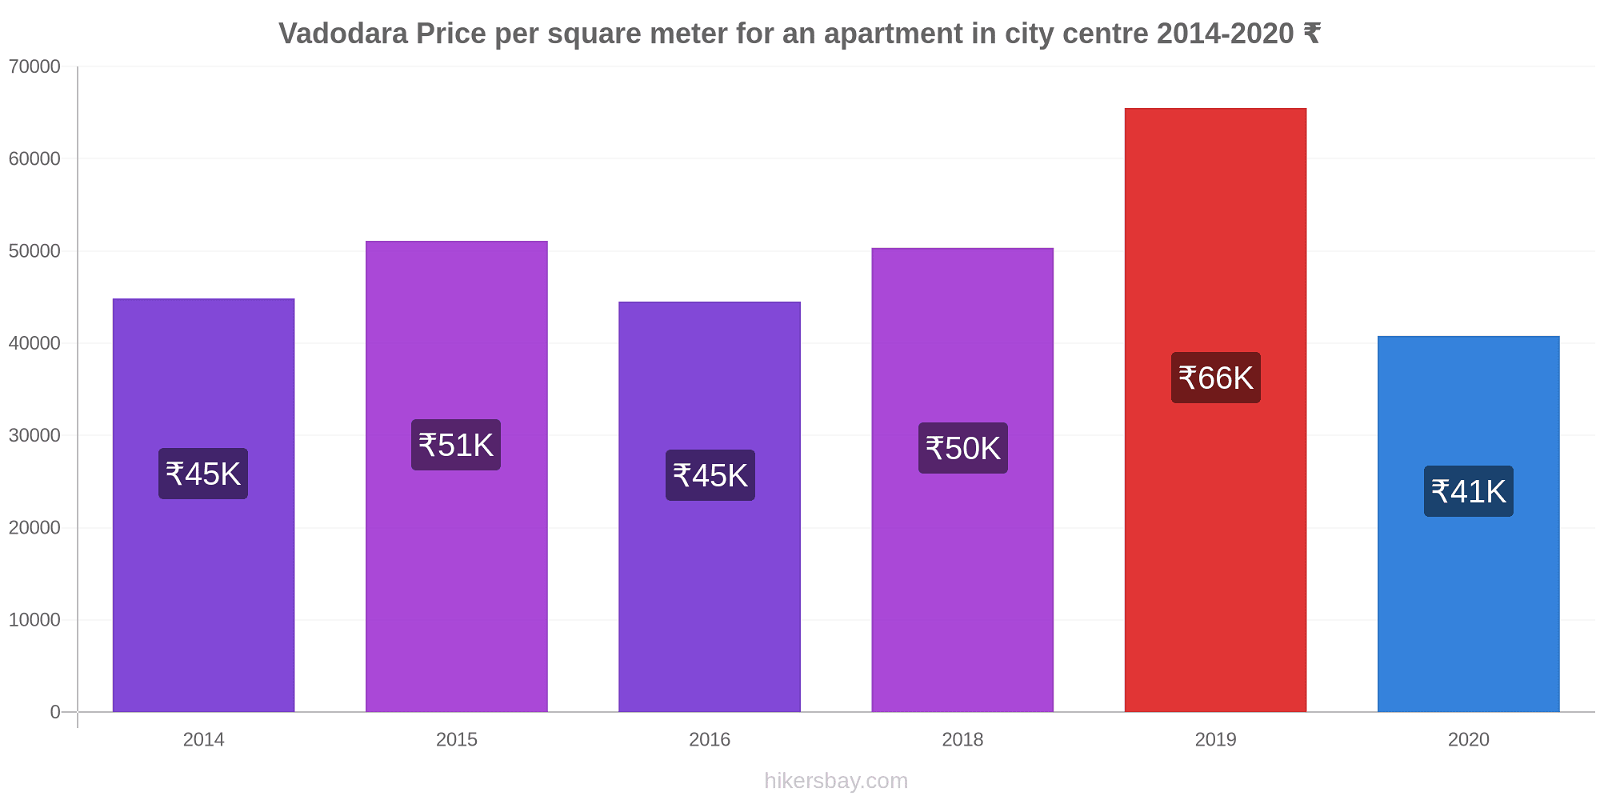 Vadodara price changes Price per square meter for an apartment in city centre hikersbay.com